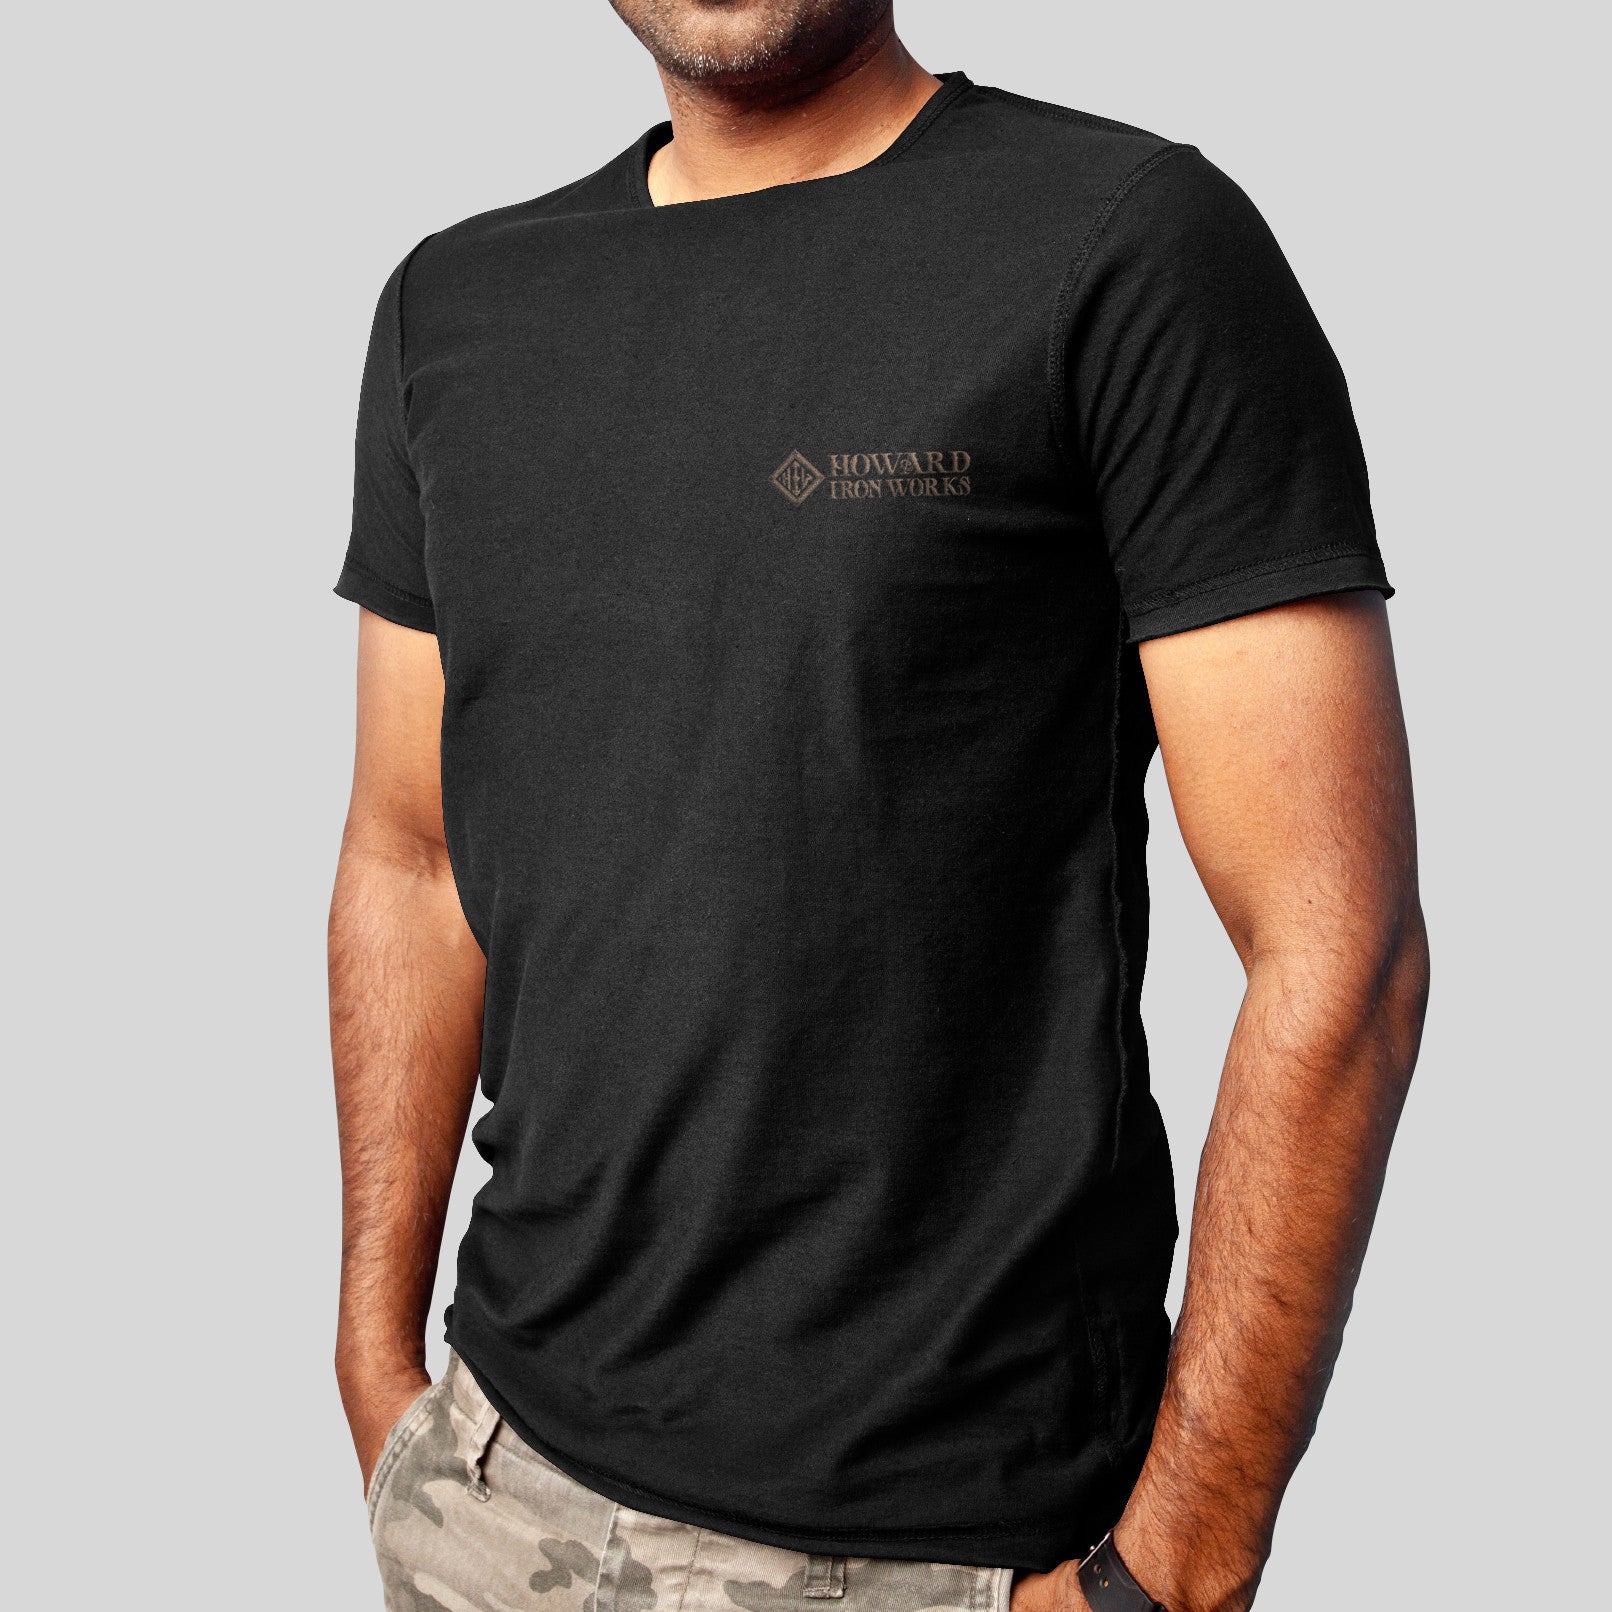 Men's T-Shirt, Short Sleeve, Black - from Howard Iron Works Printing Museum